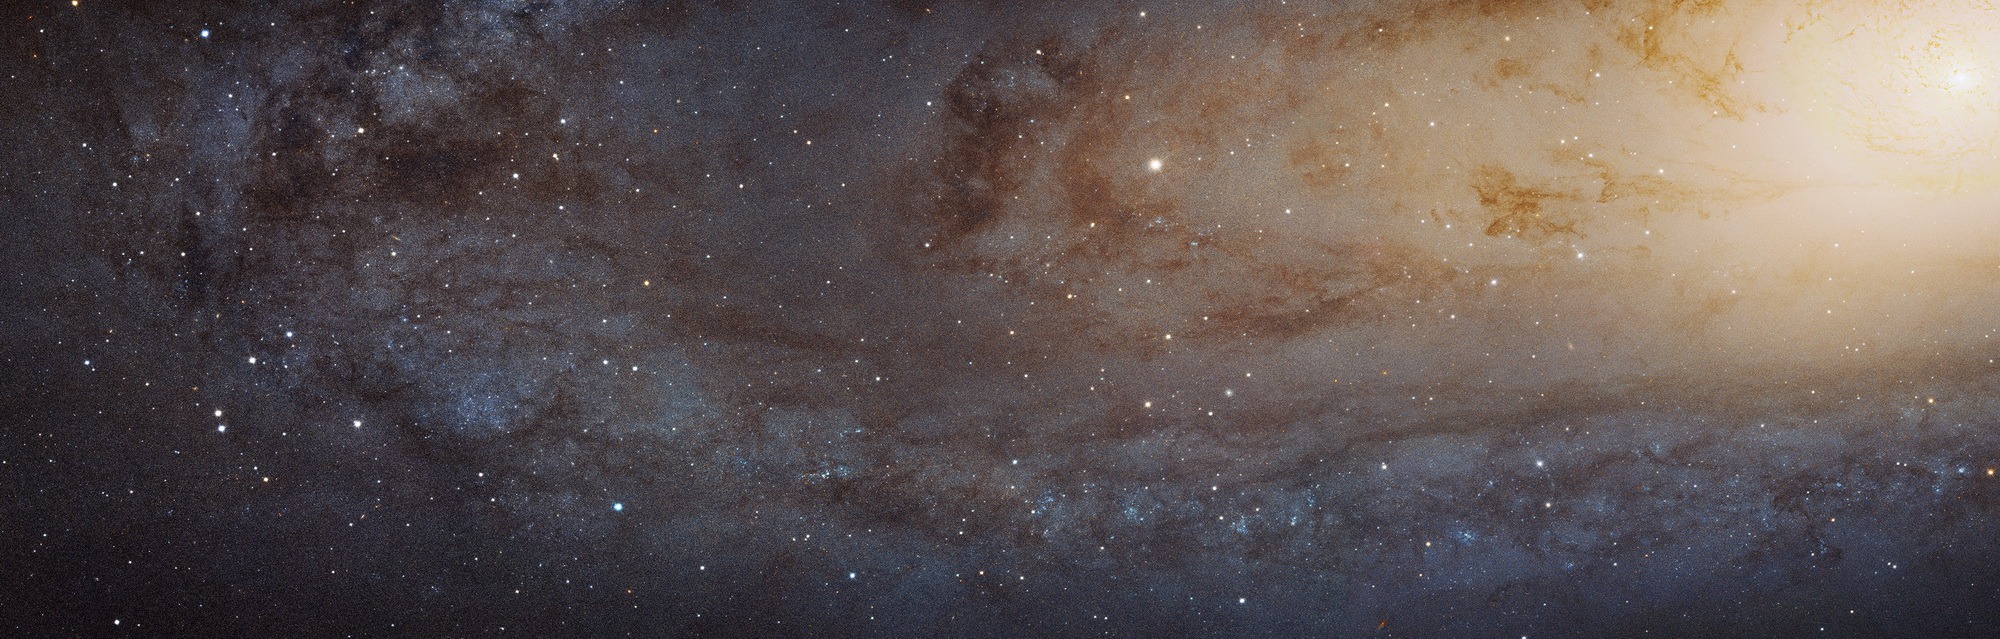 M31 HST mosaic